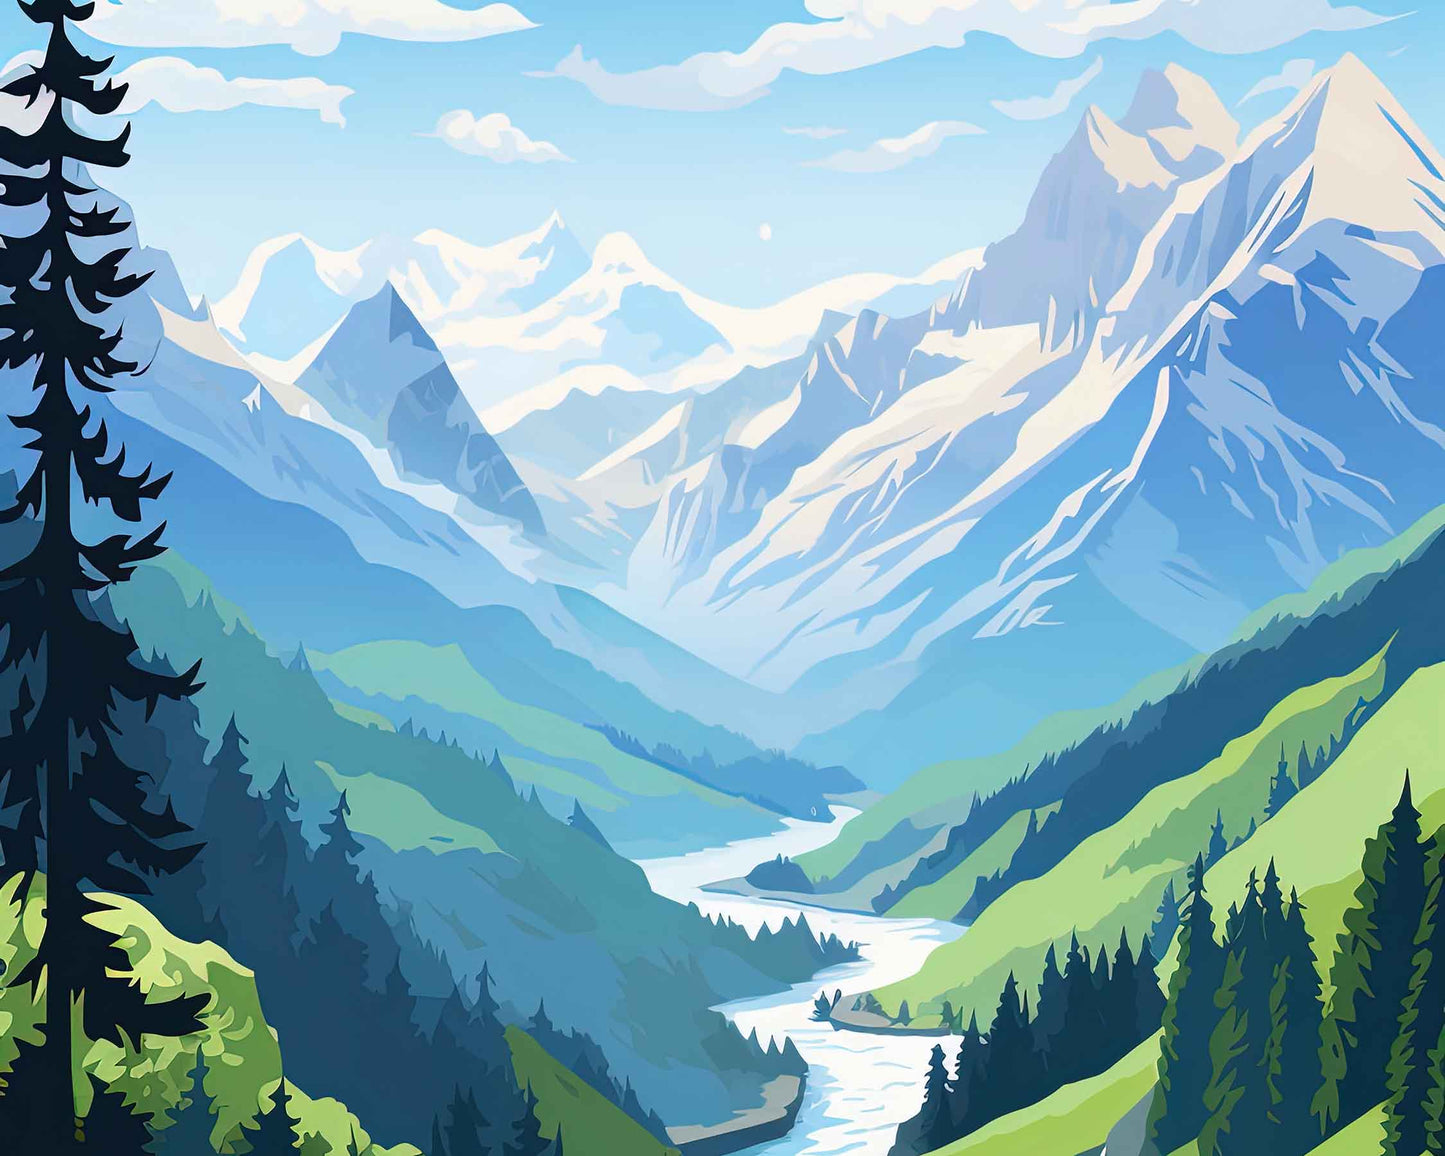 Framed Image of Swiss Alps Switzerland Wall Art Print Travel Posters Illustration